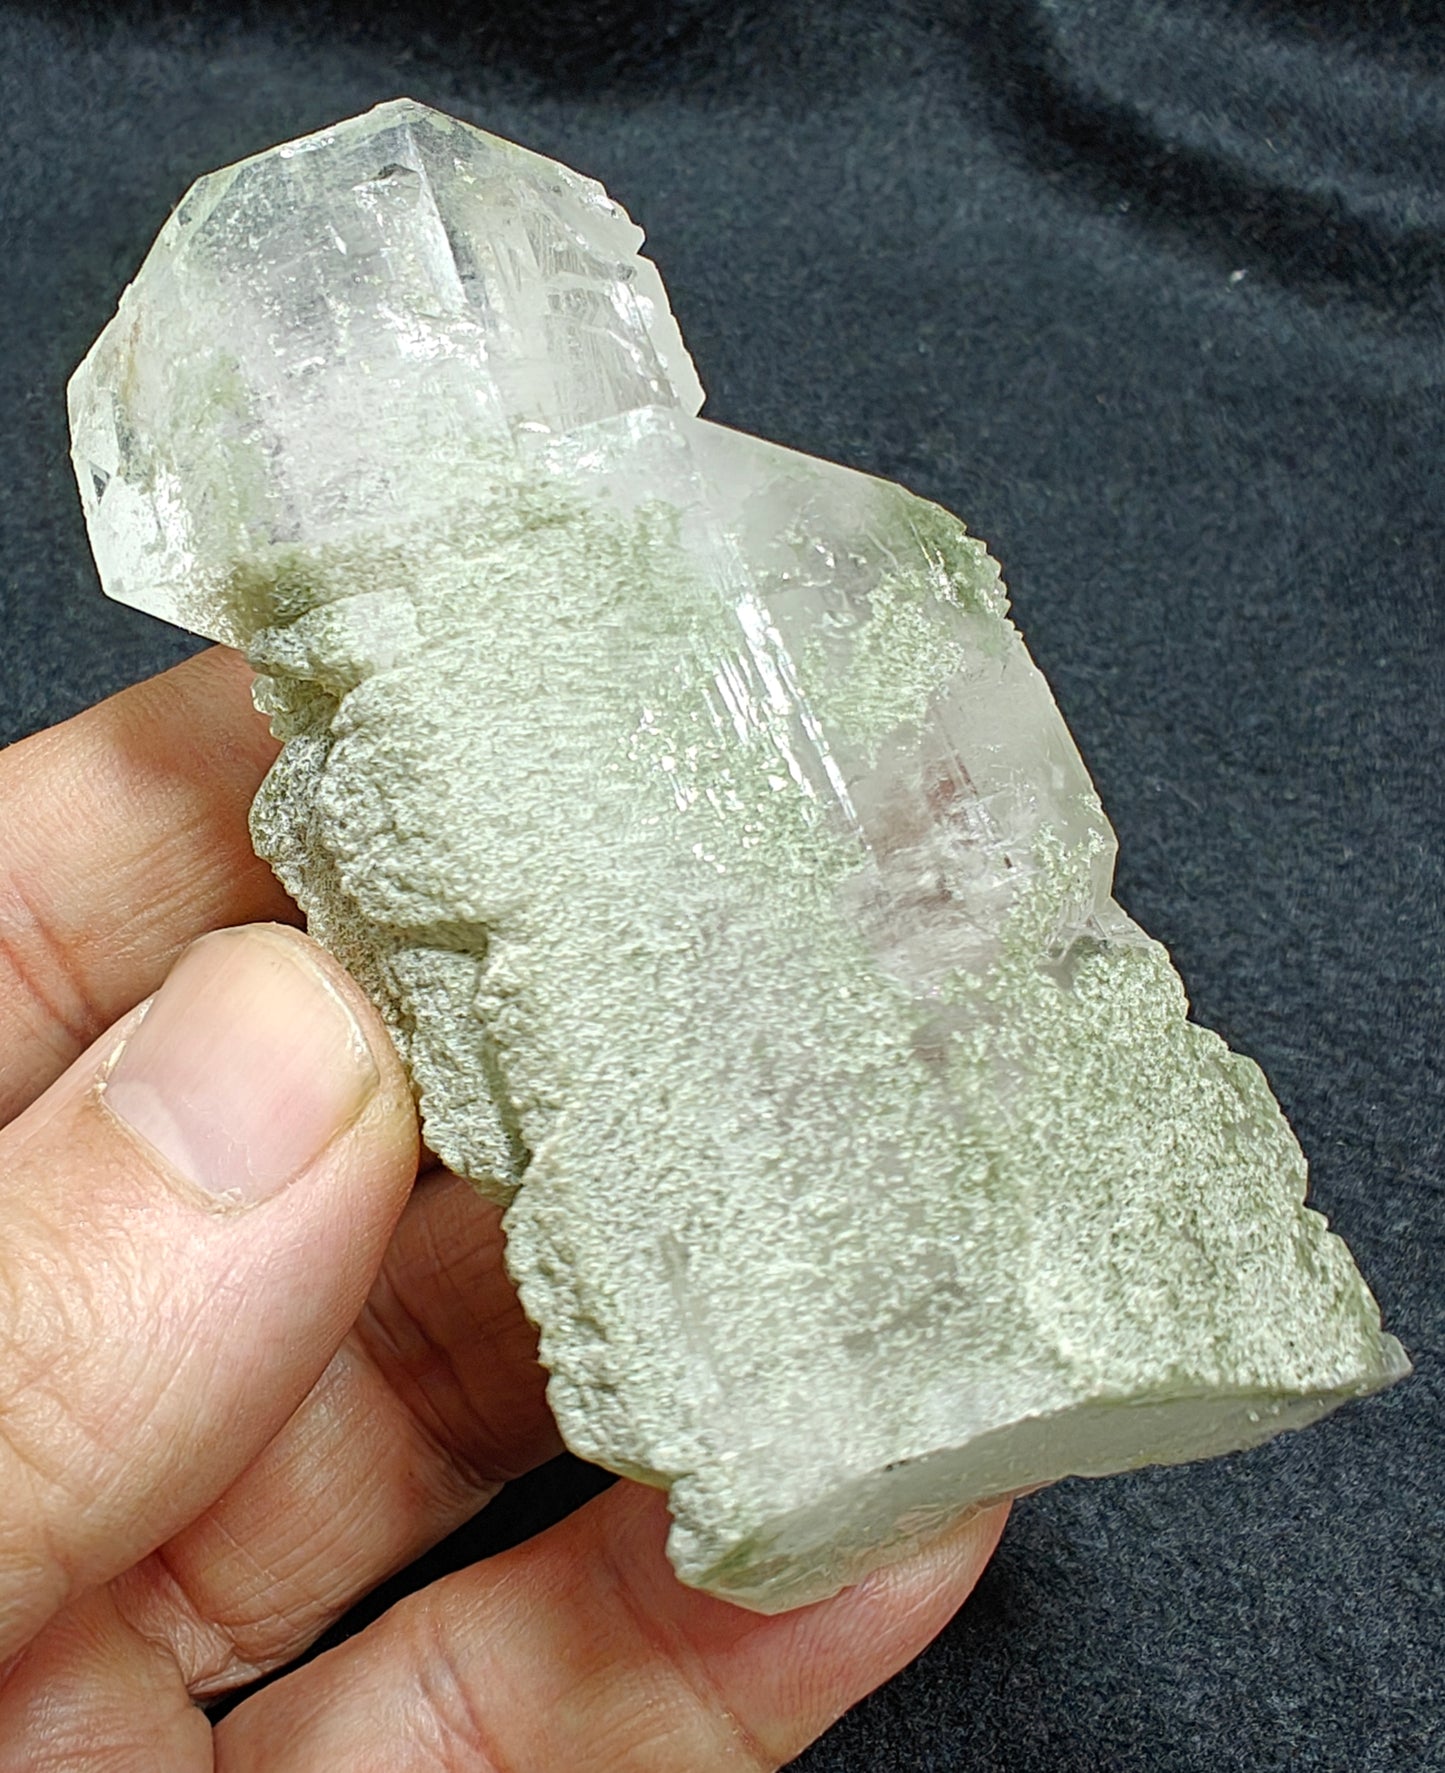 Faden/Chlorite Quartz Crystal 127 grams